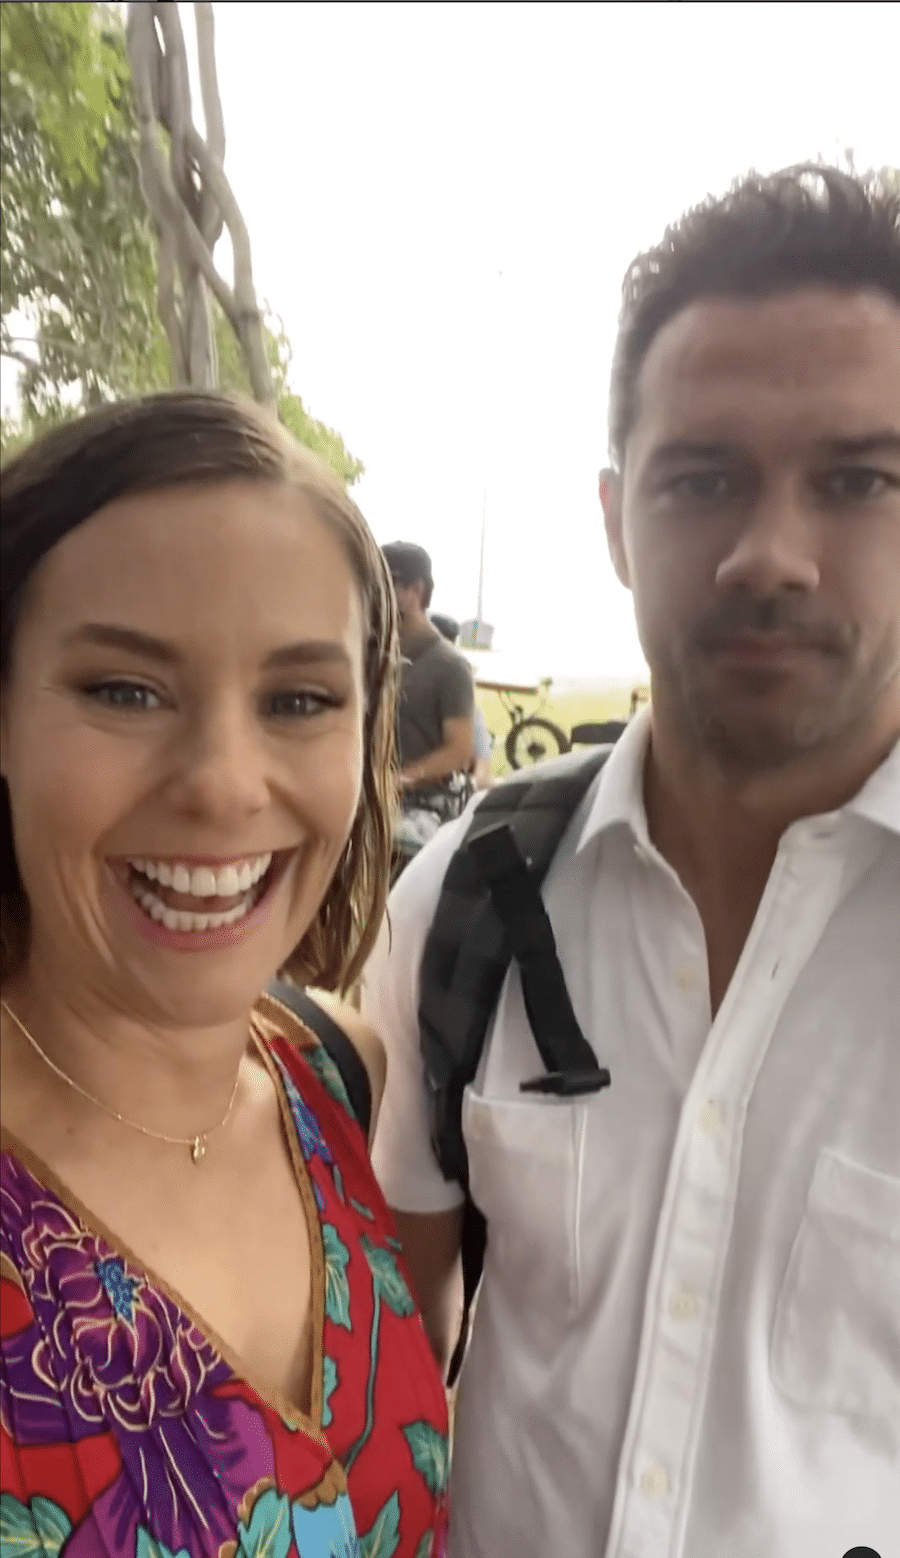 Ryan and Ashley in Hawaii-https://www.instagram.com/p/Cco6g2qAoke/